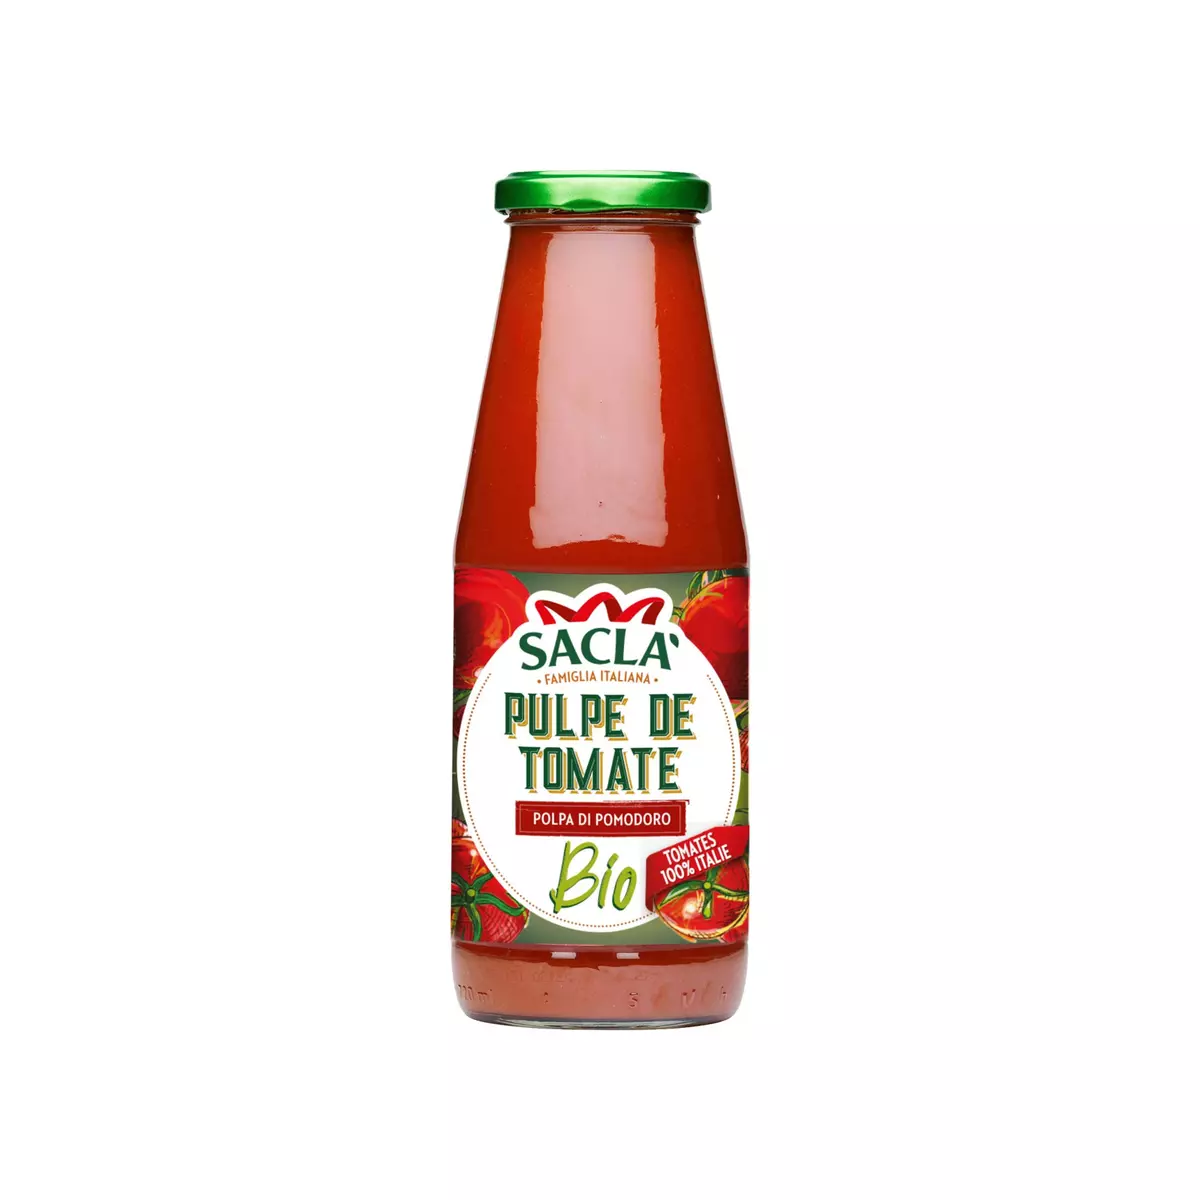 SACLA Pulpe de tomate bio 680g